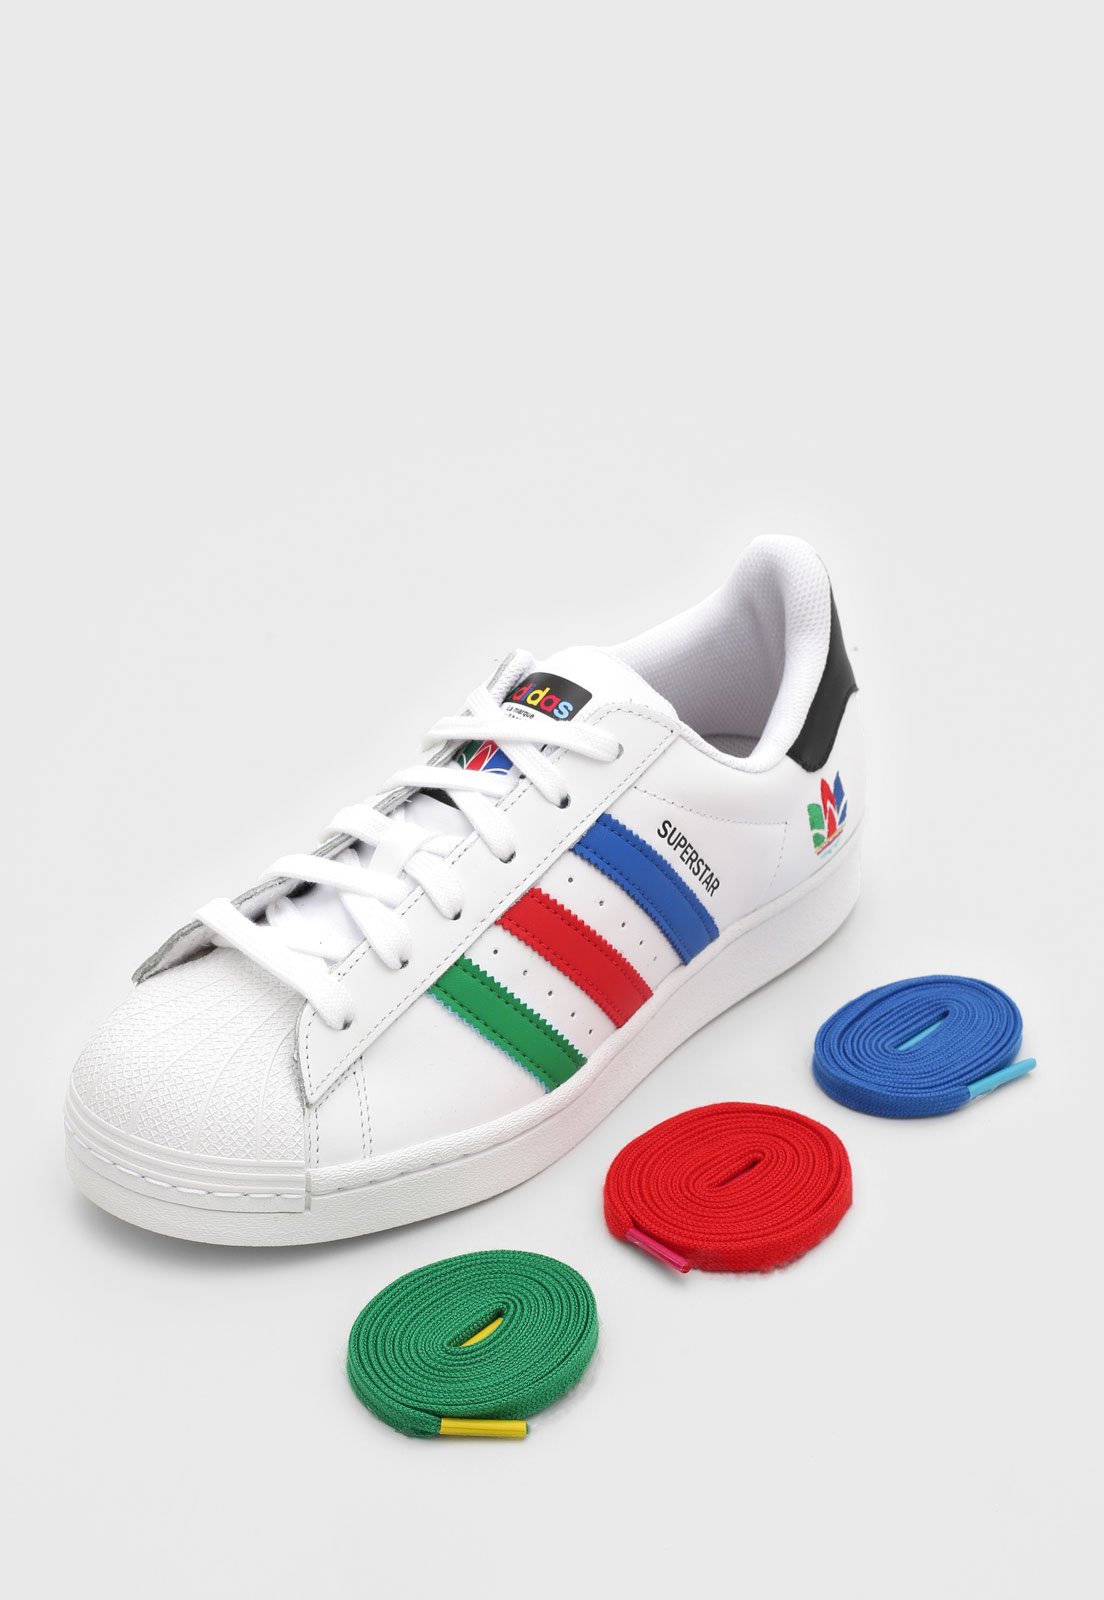 Adidas Superstar Colorido Masculino Italy, SAVE 54% -